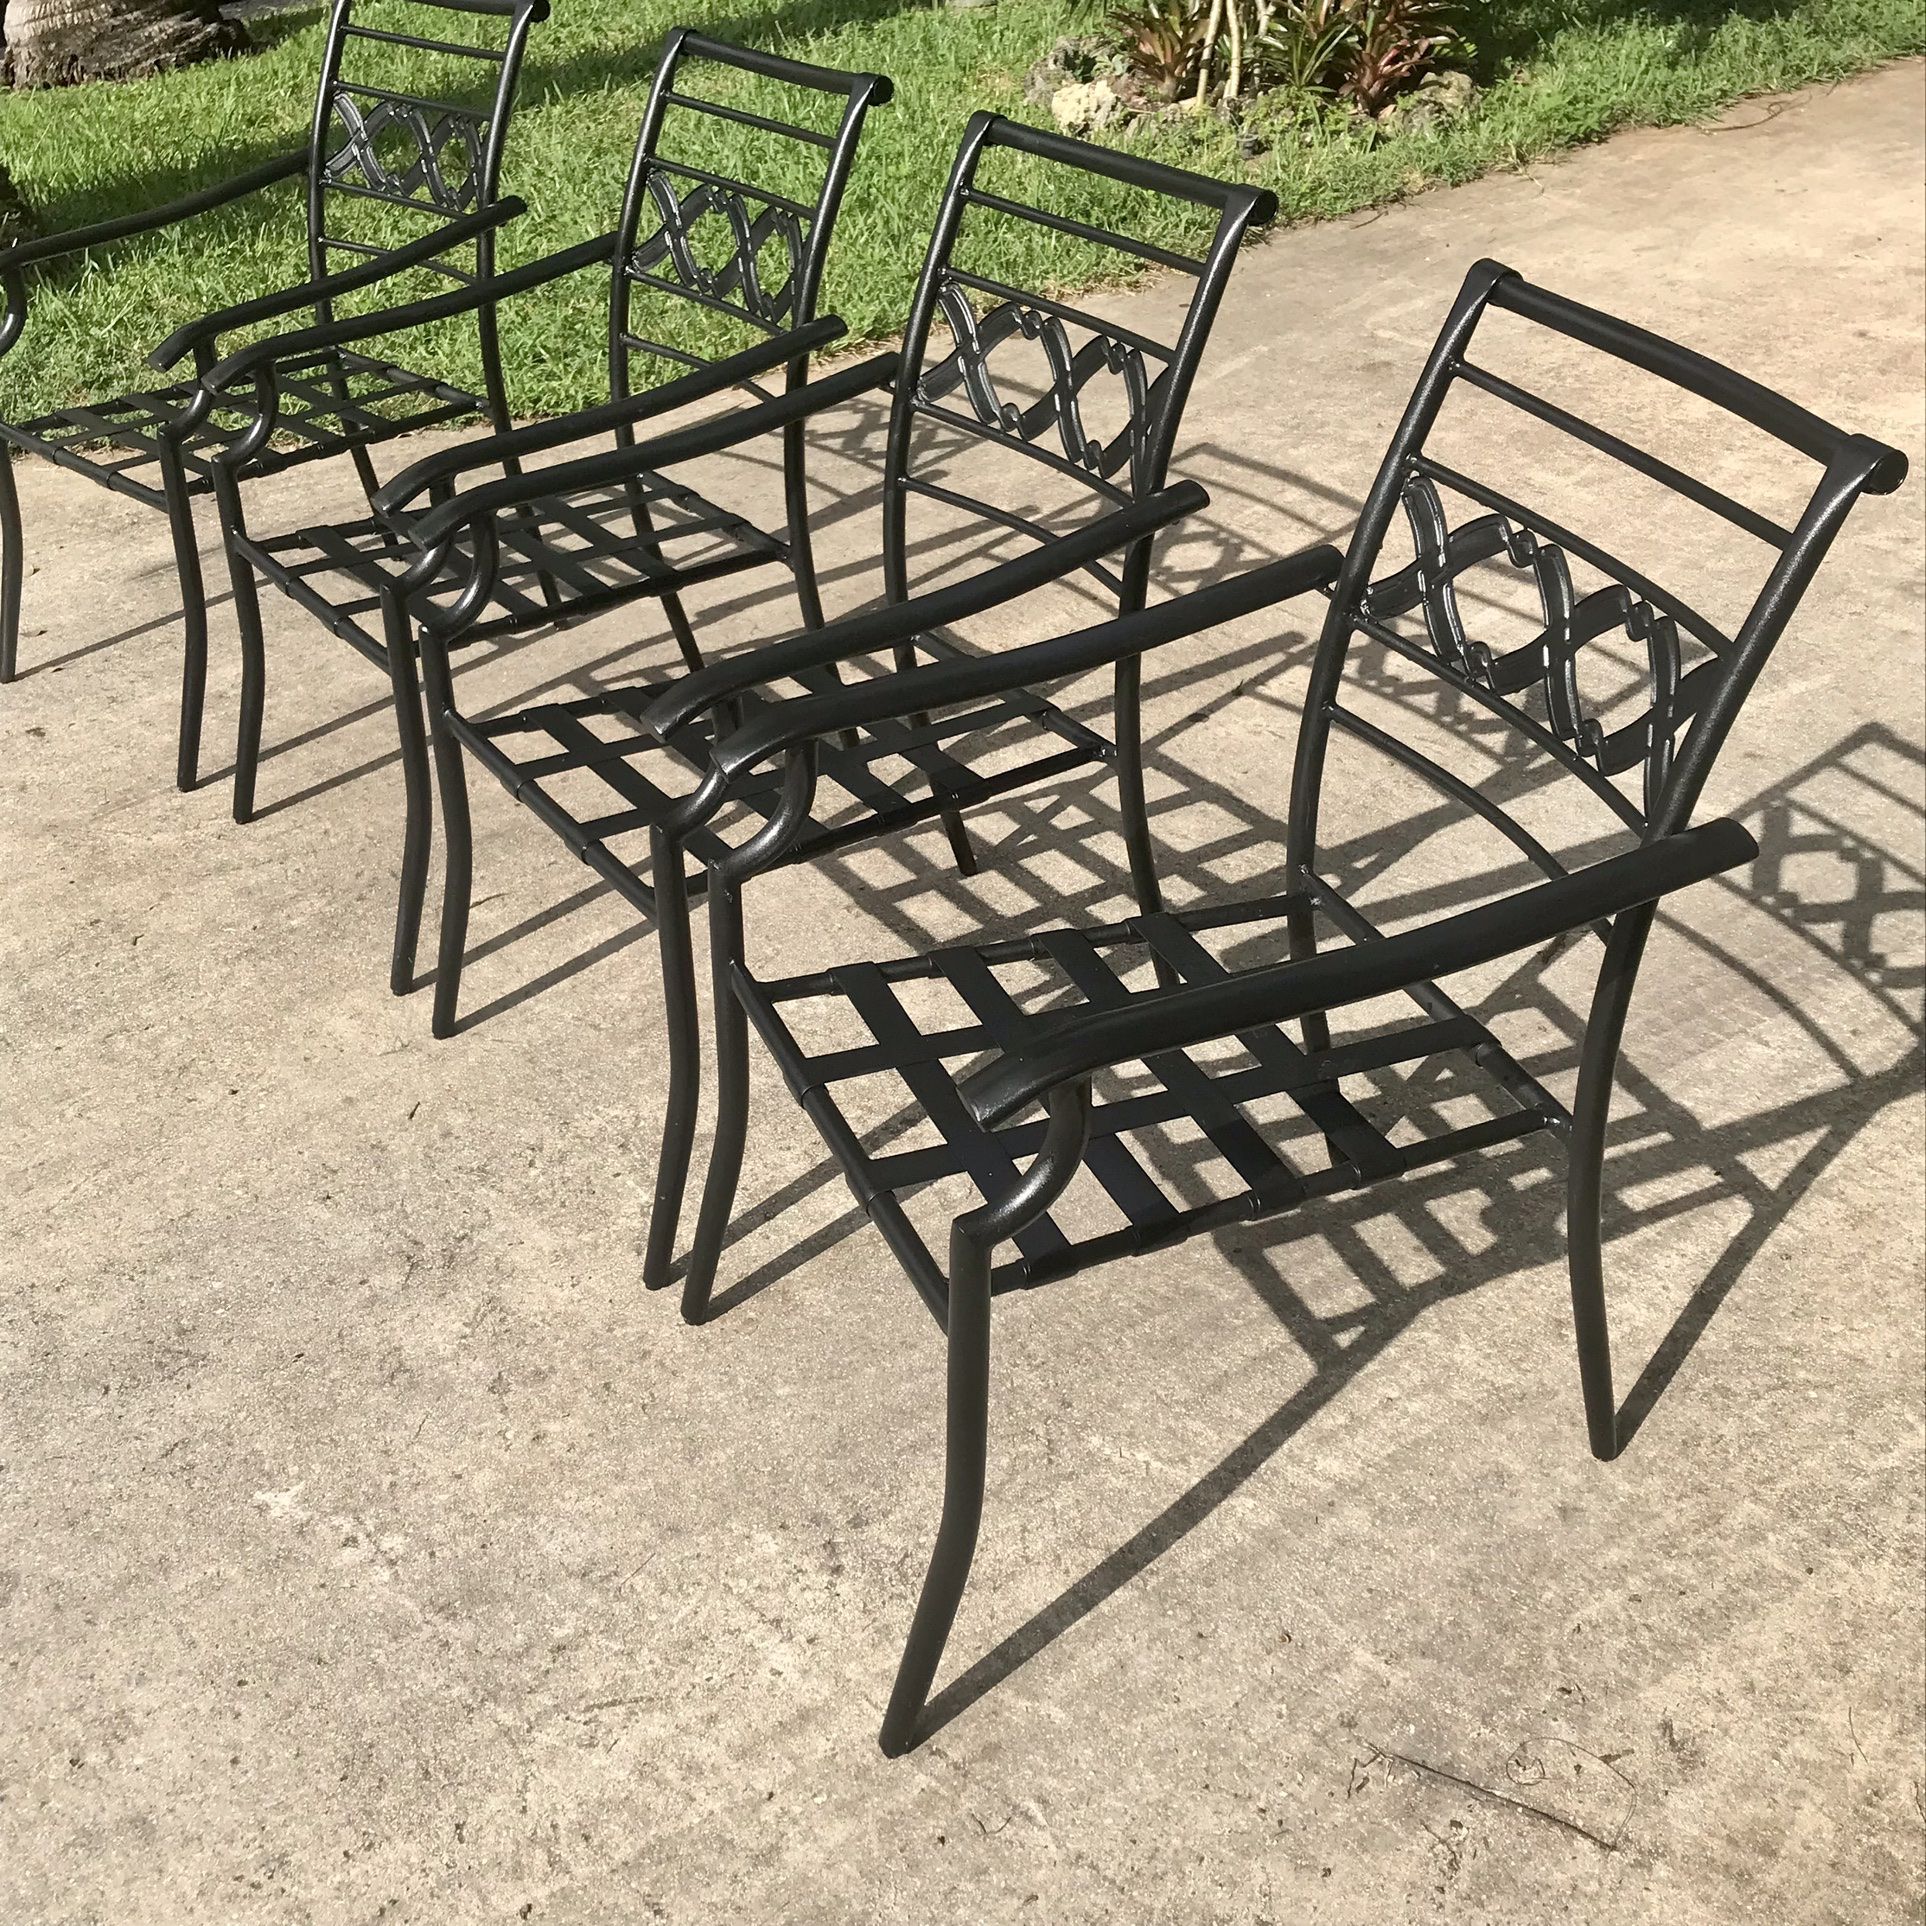 Metal Patio Chairs/Webbing Seats-$20 Each